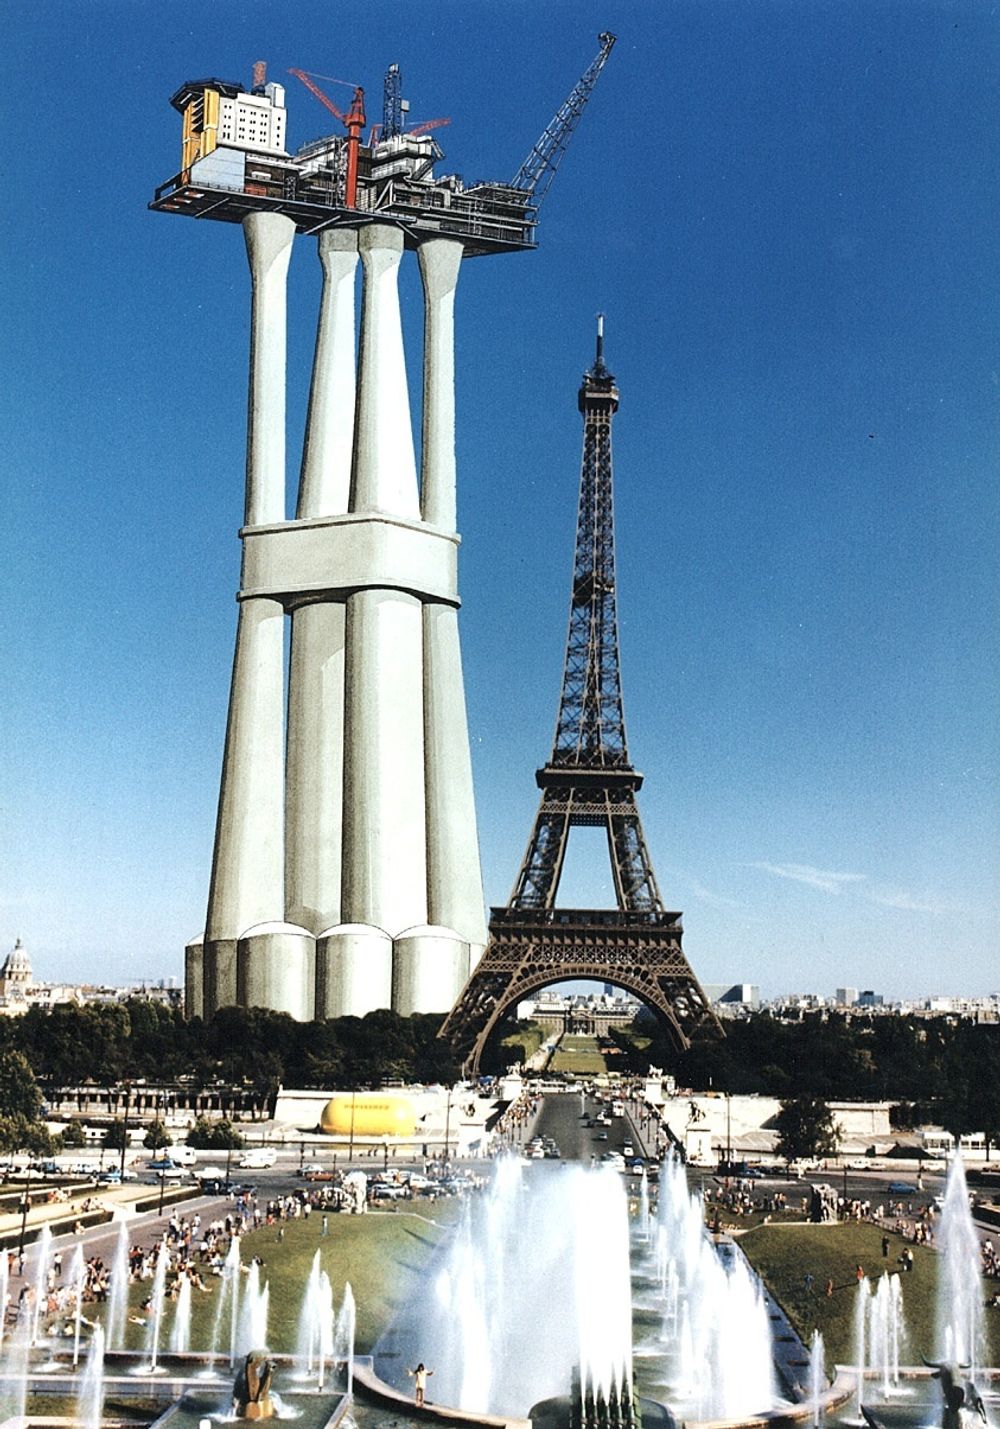 STOR: Troll A sammenliknet med Eiffeltårnet i Paris.